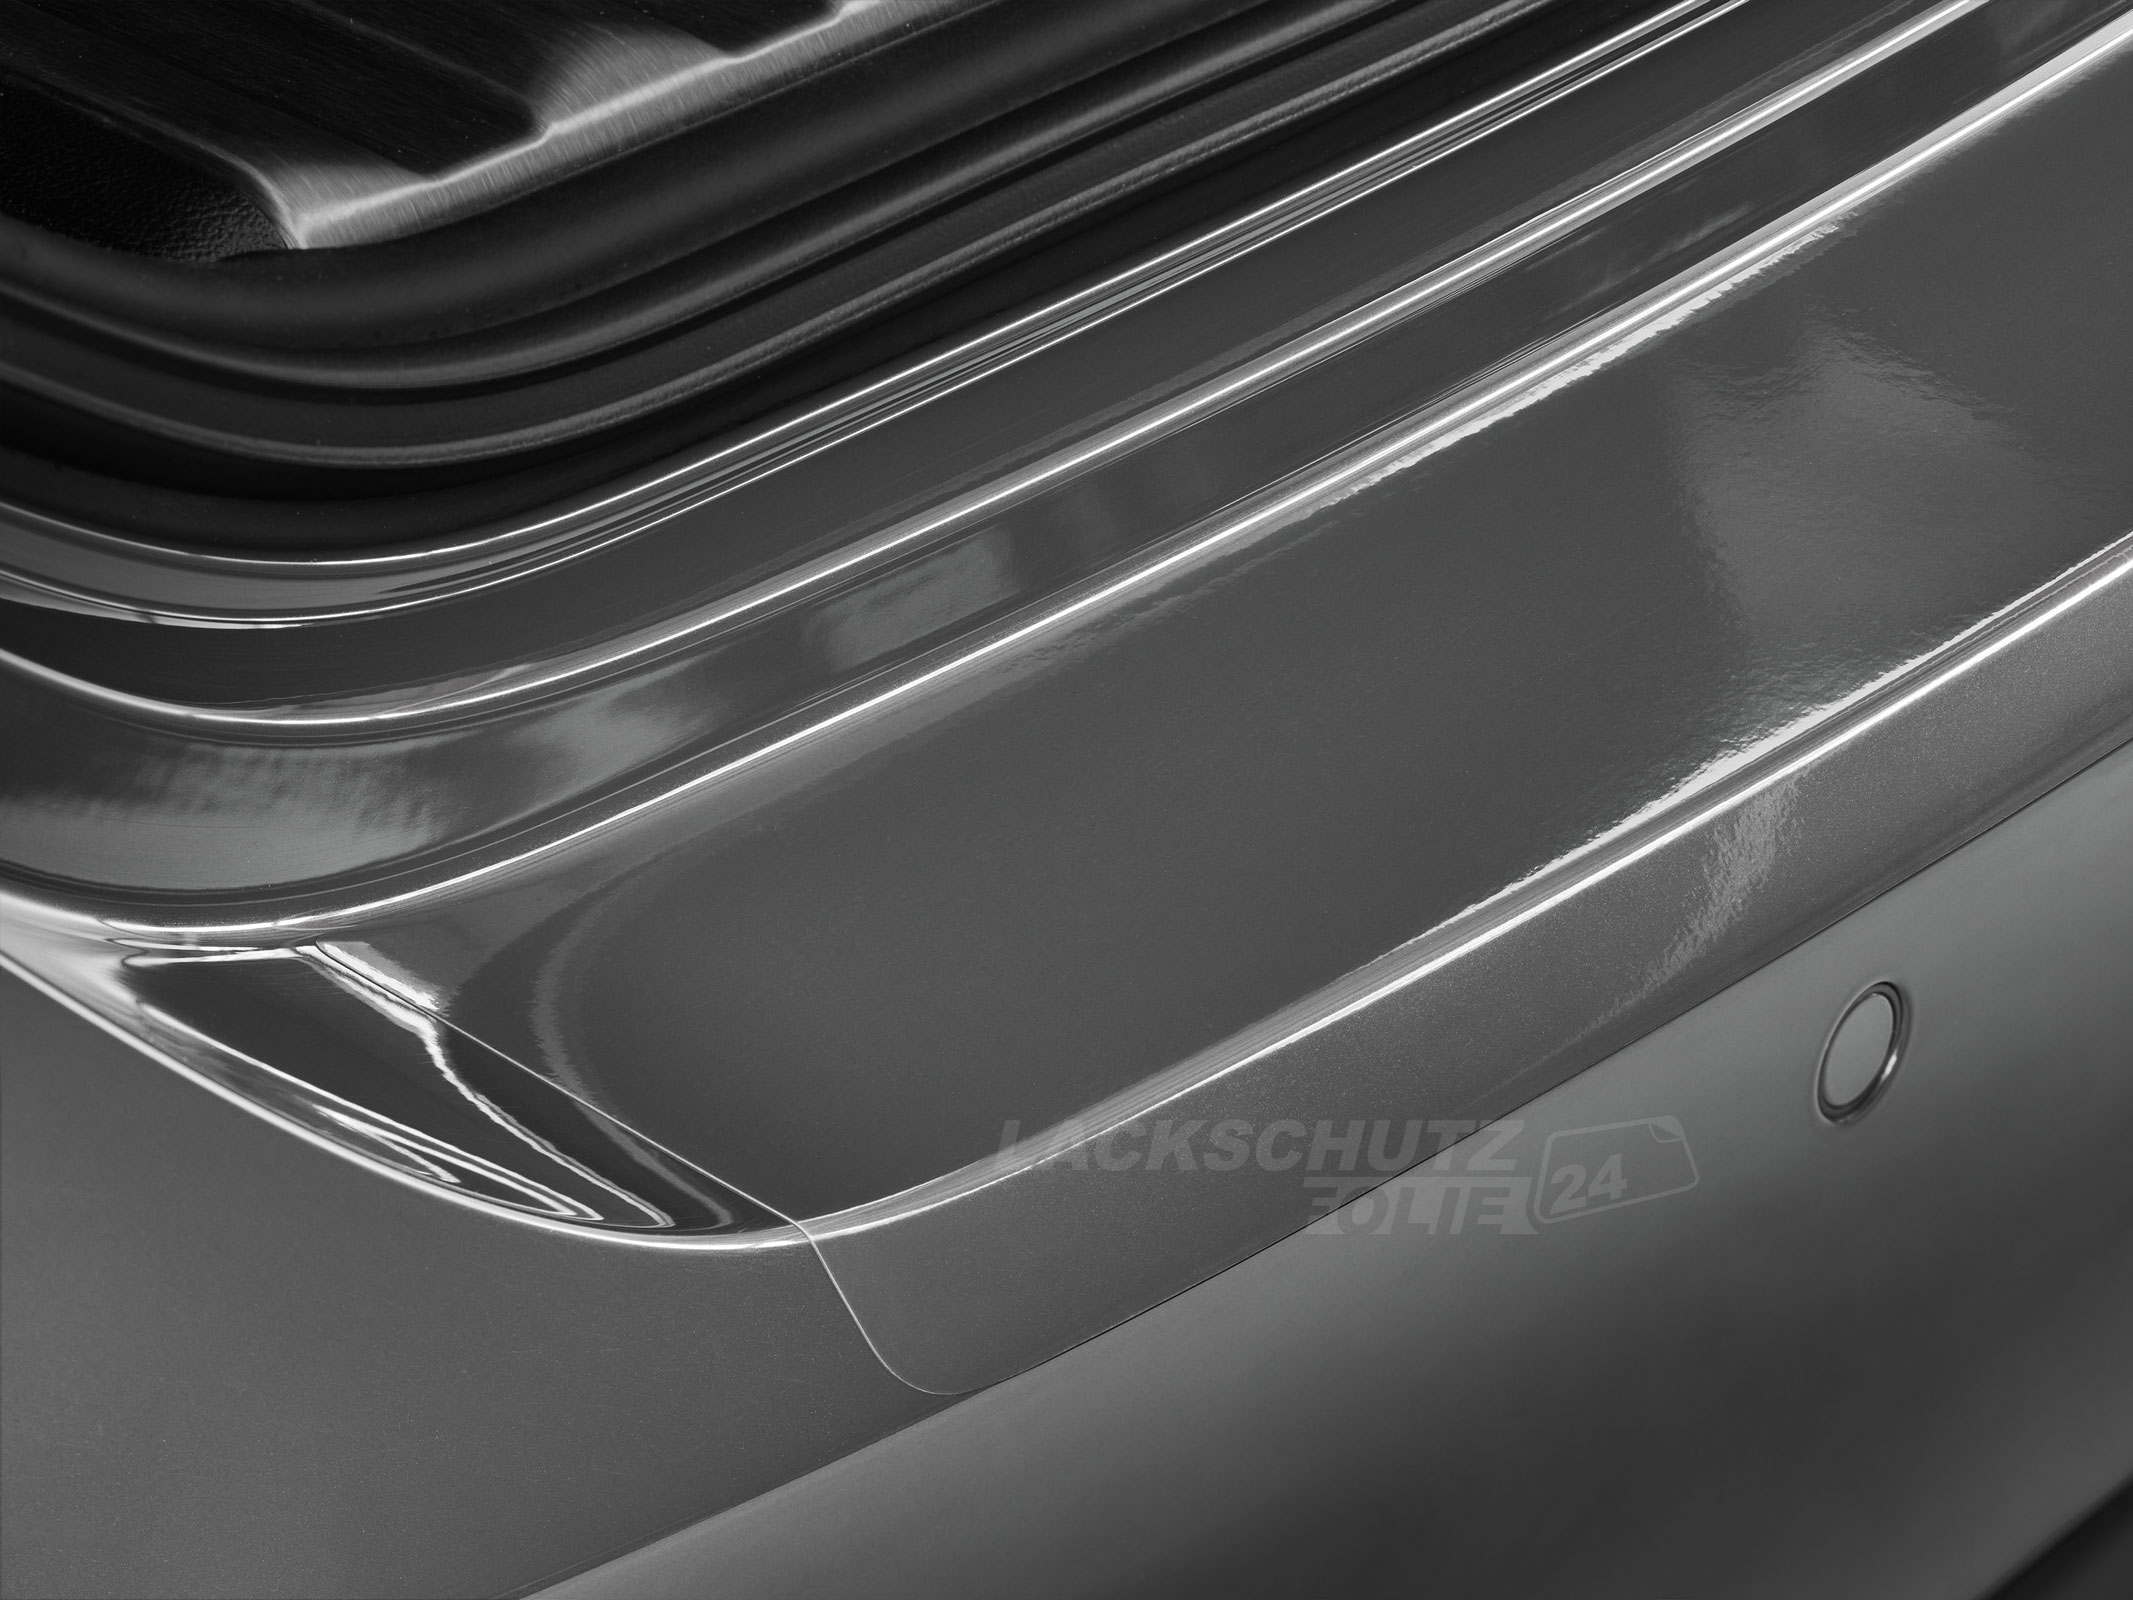 Ladekantenschutzfolie - Transparent Glatt Hochglänzend 150 µm stark für Daewoo Aveo ab BJ 2007-2011